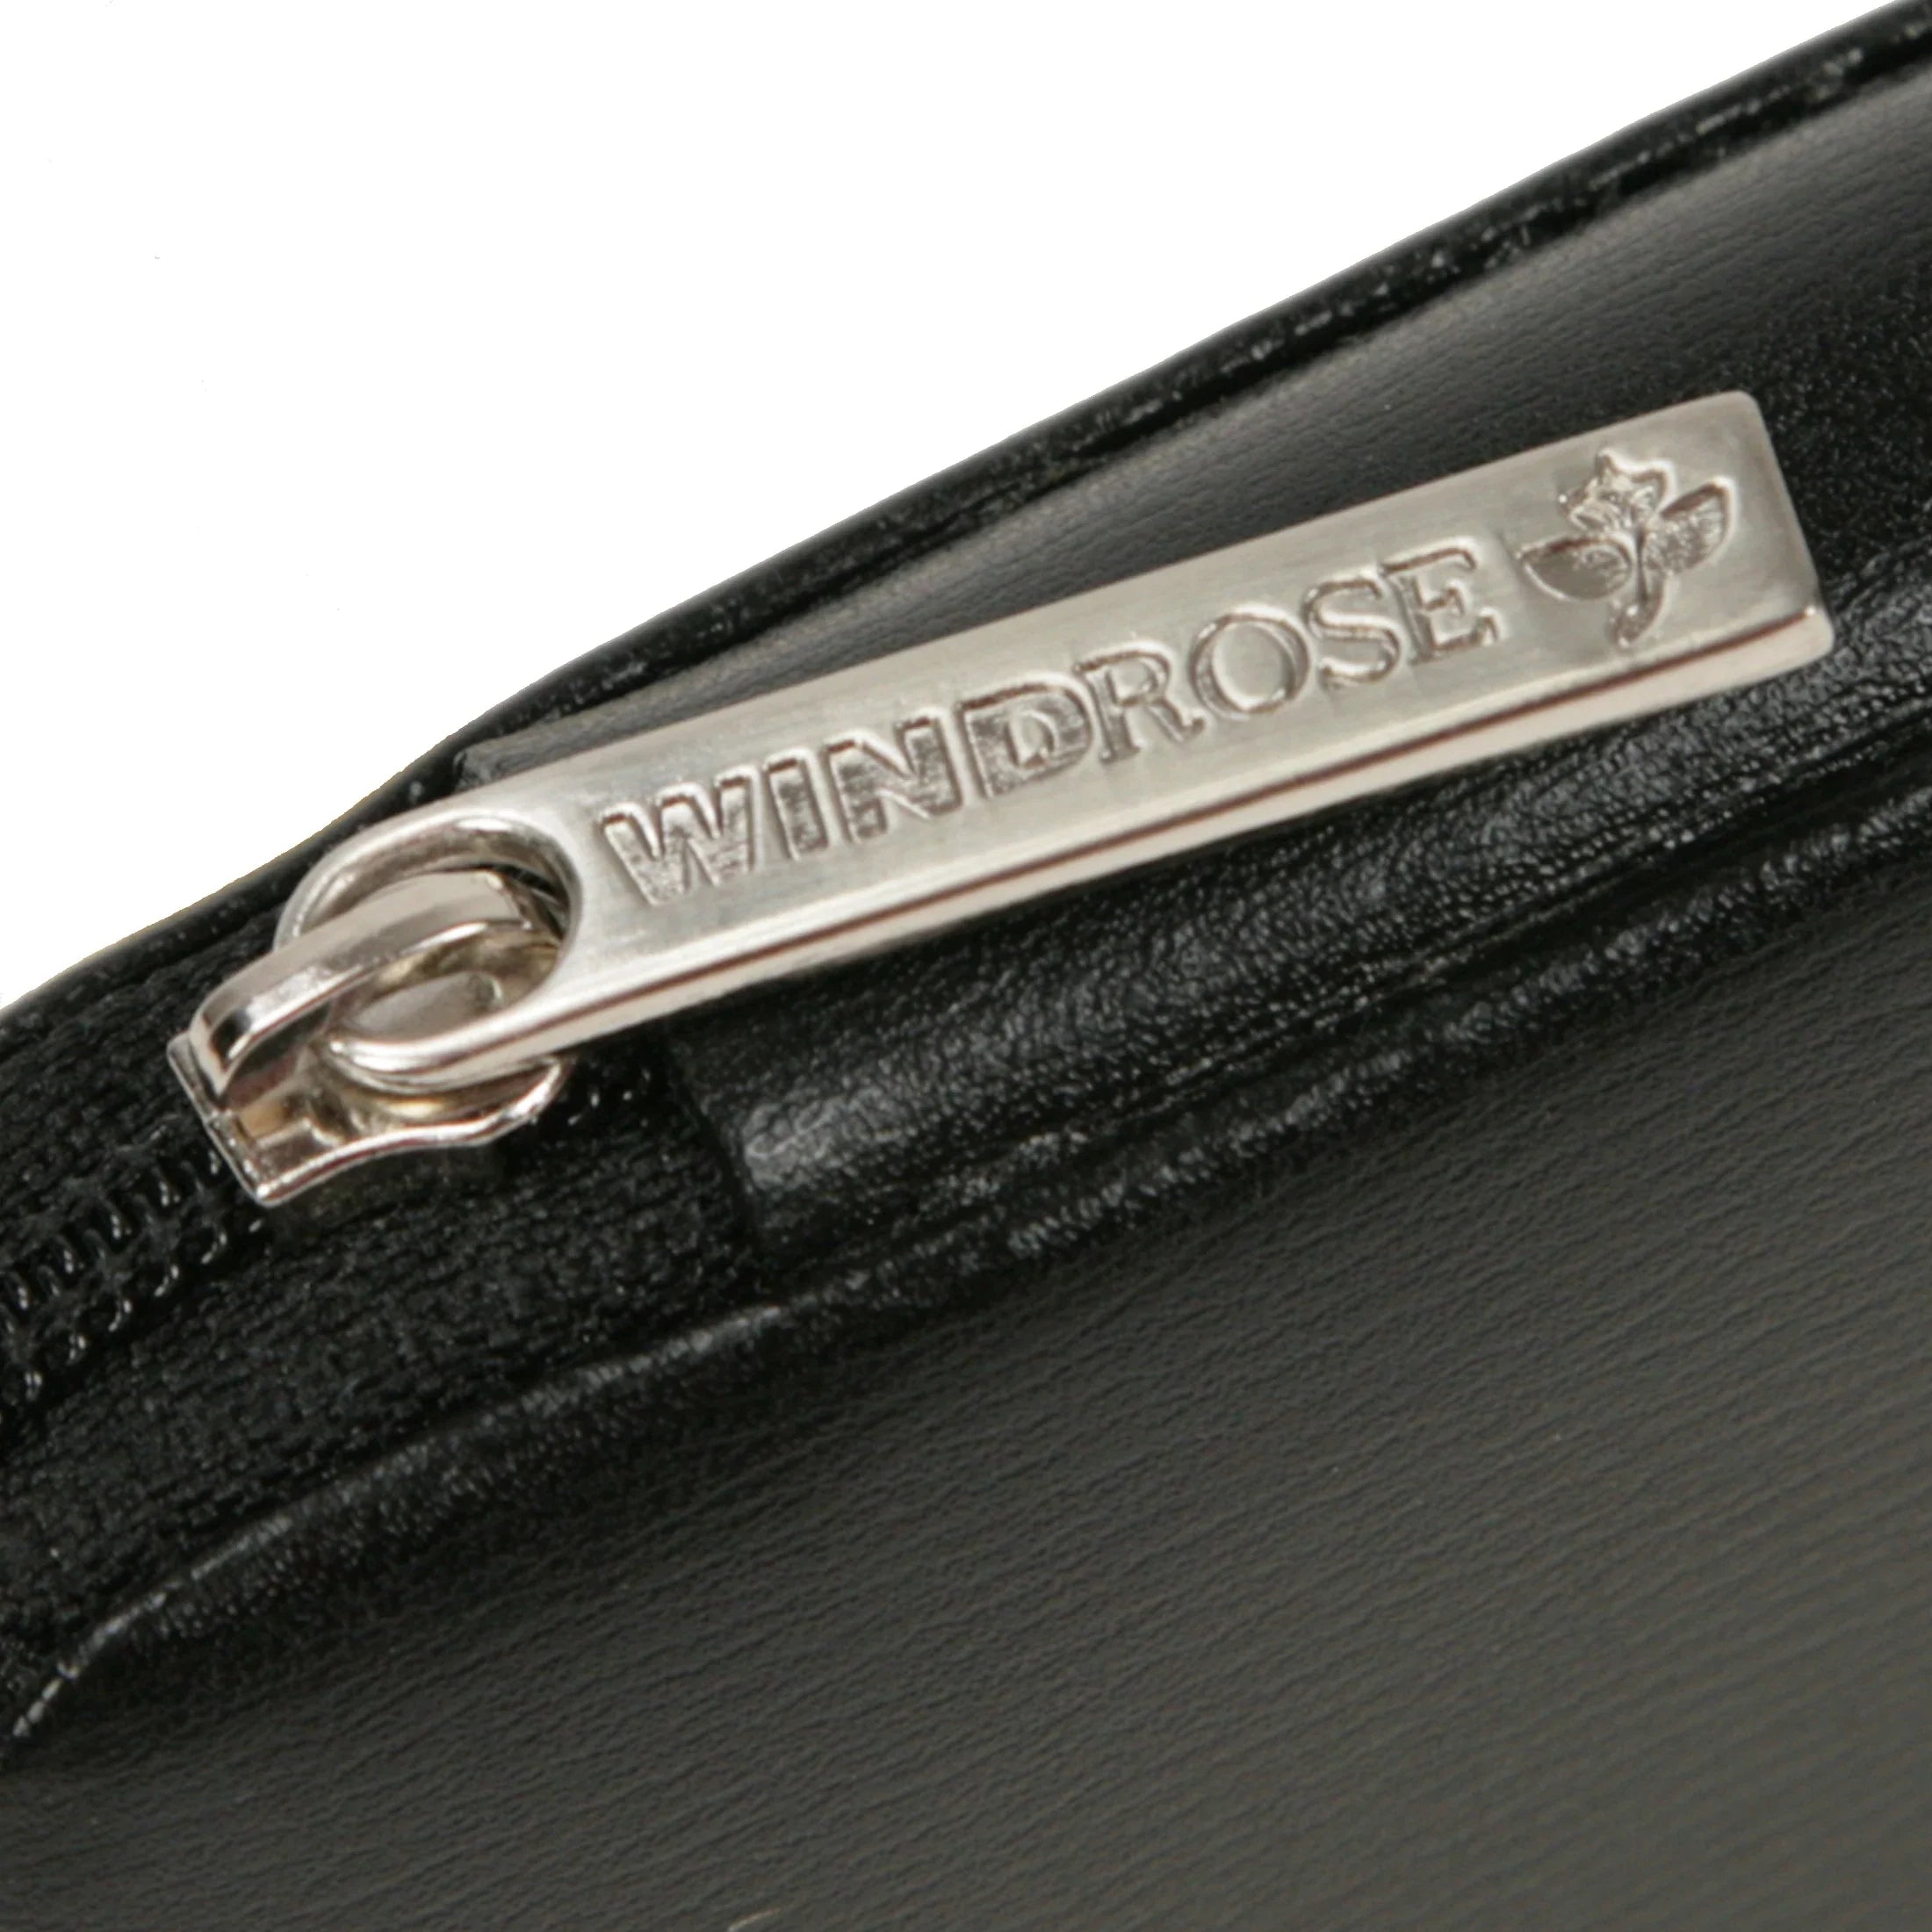 Windrose Ambiance Manicure leather zipper case - black